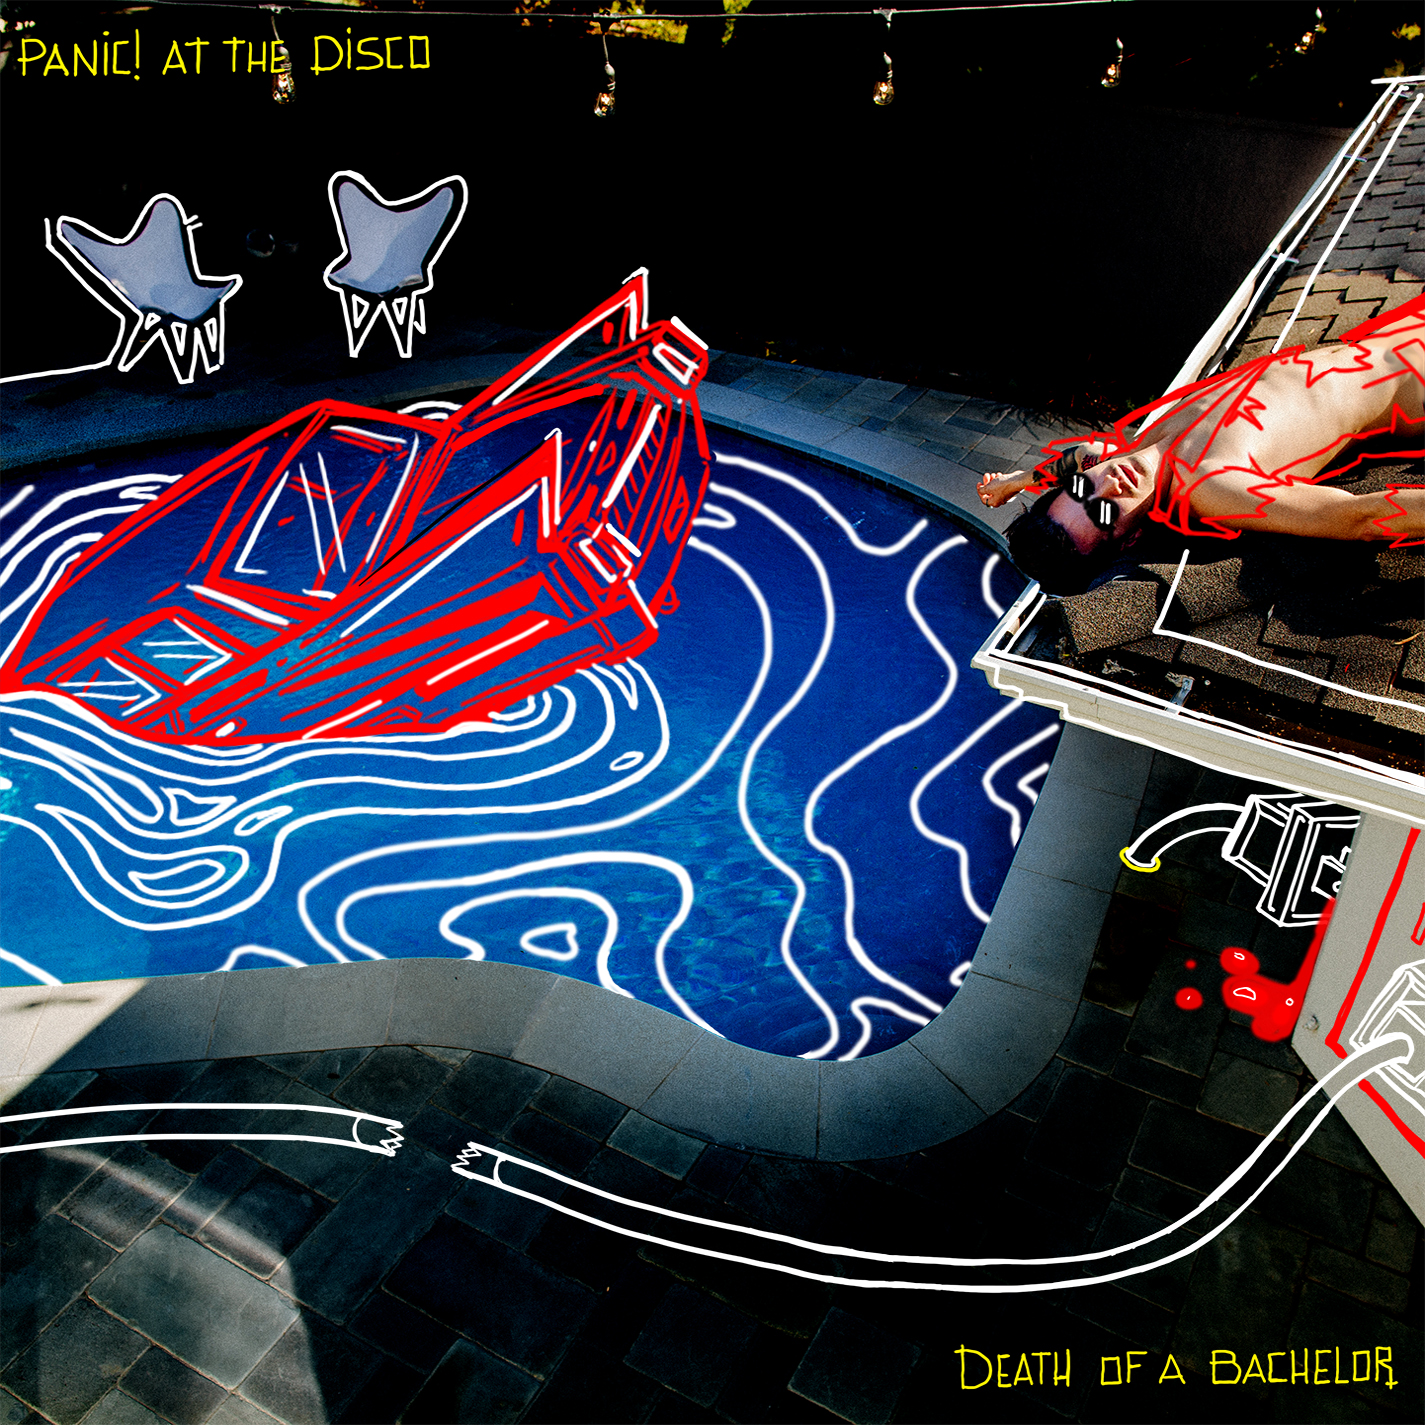 Panic! At The Disco: da domani “Death of a bachelor”!